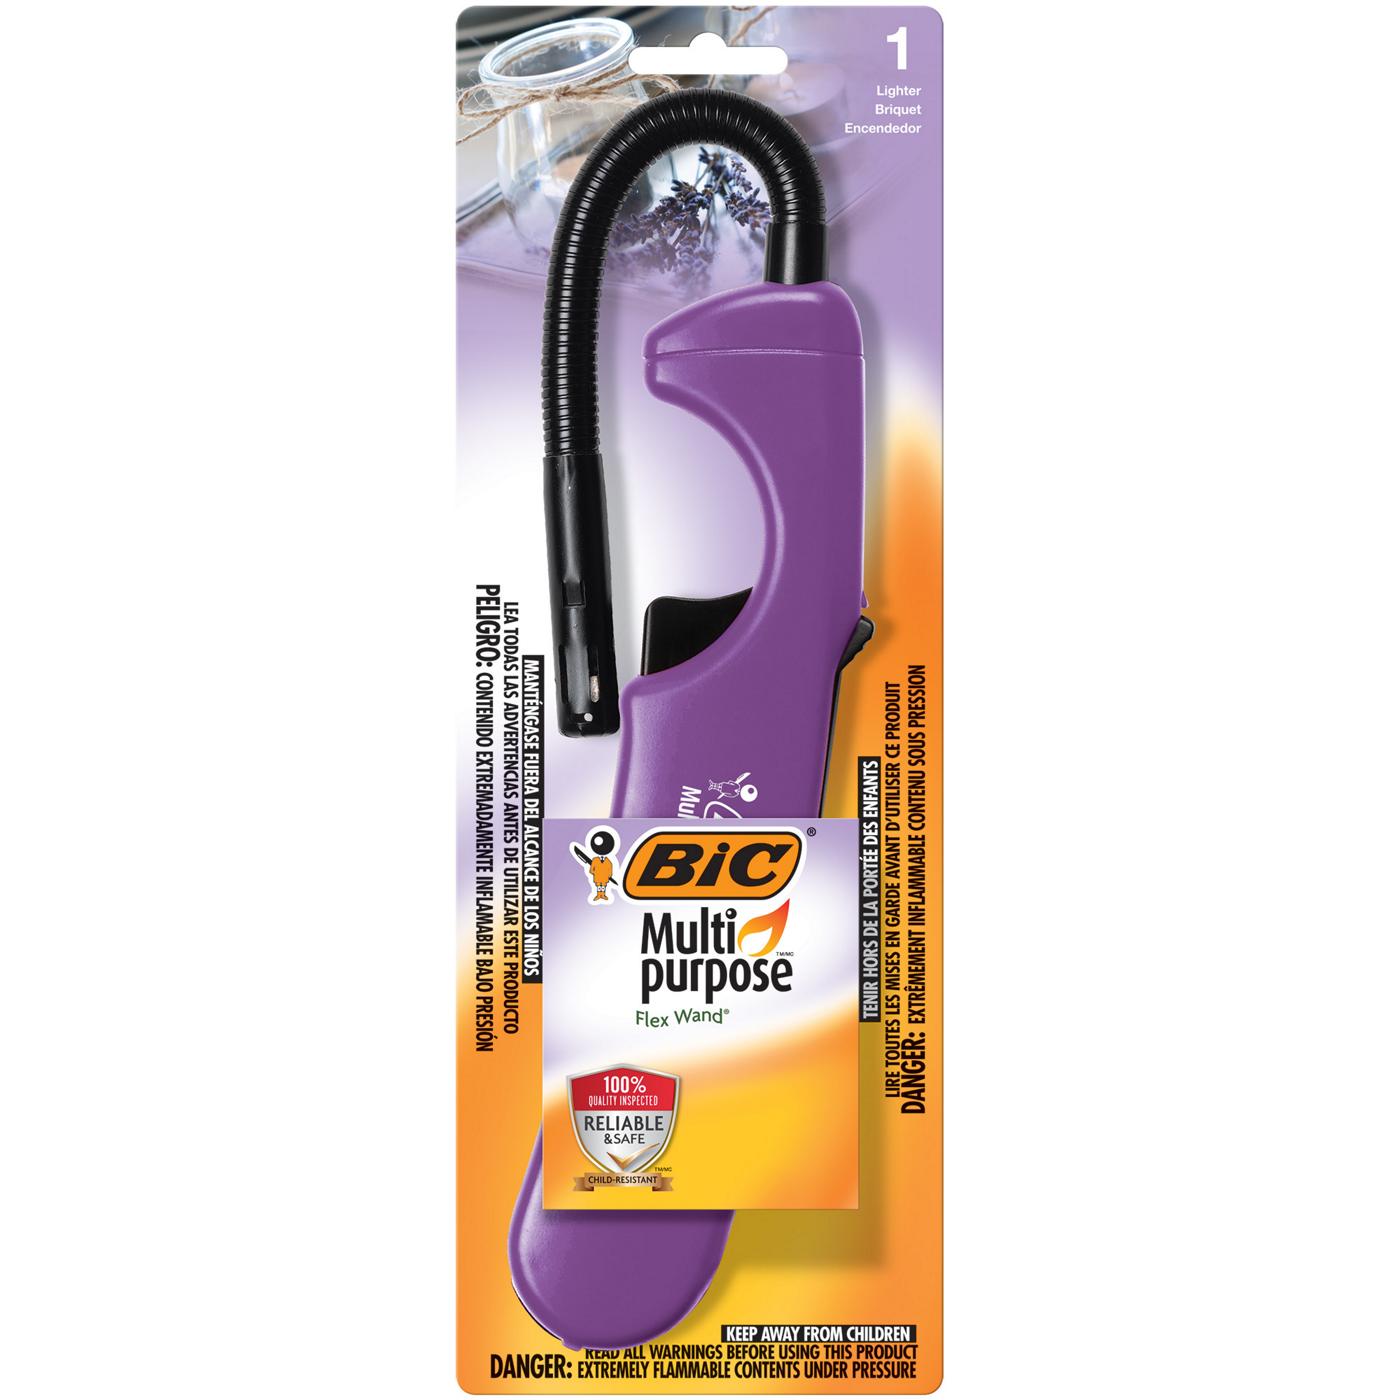 BIC Multi-Purpose Flex Wand Lighter; image 1 of 2